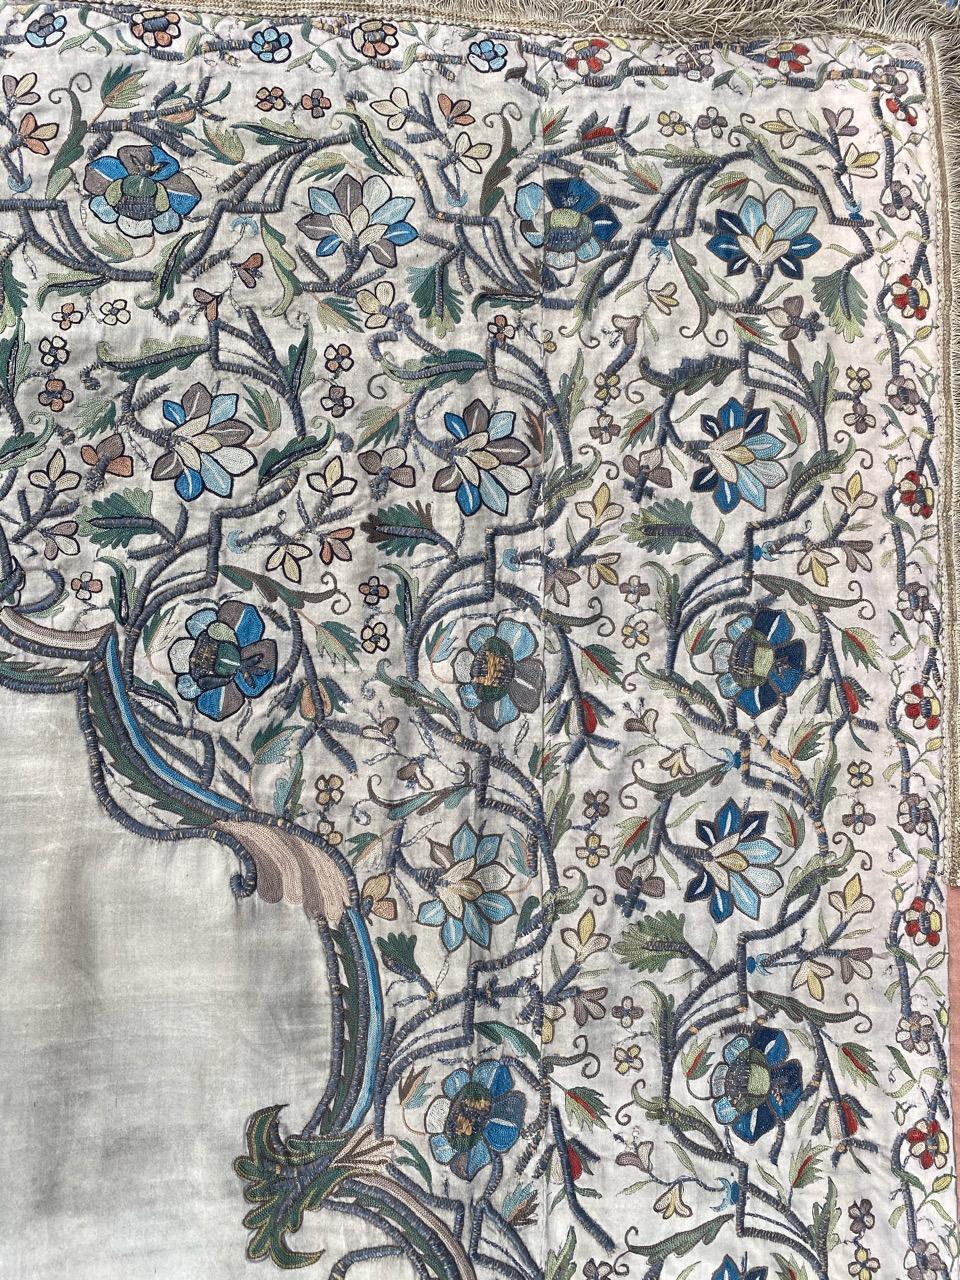 Wonderful Antique Turkish Ottoman Embroidery 3